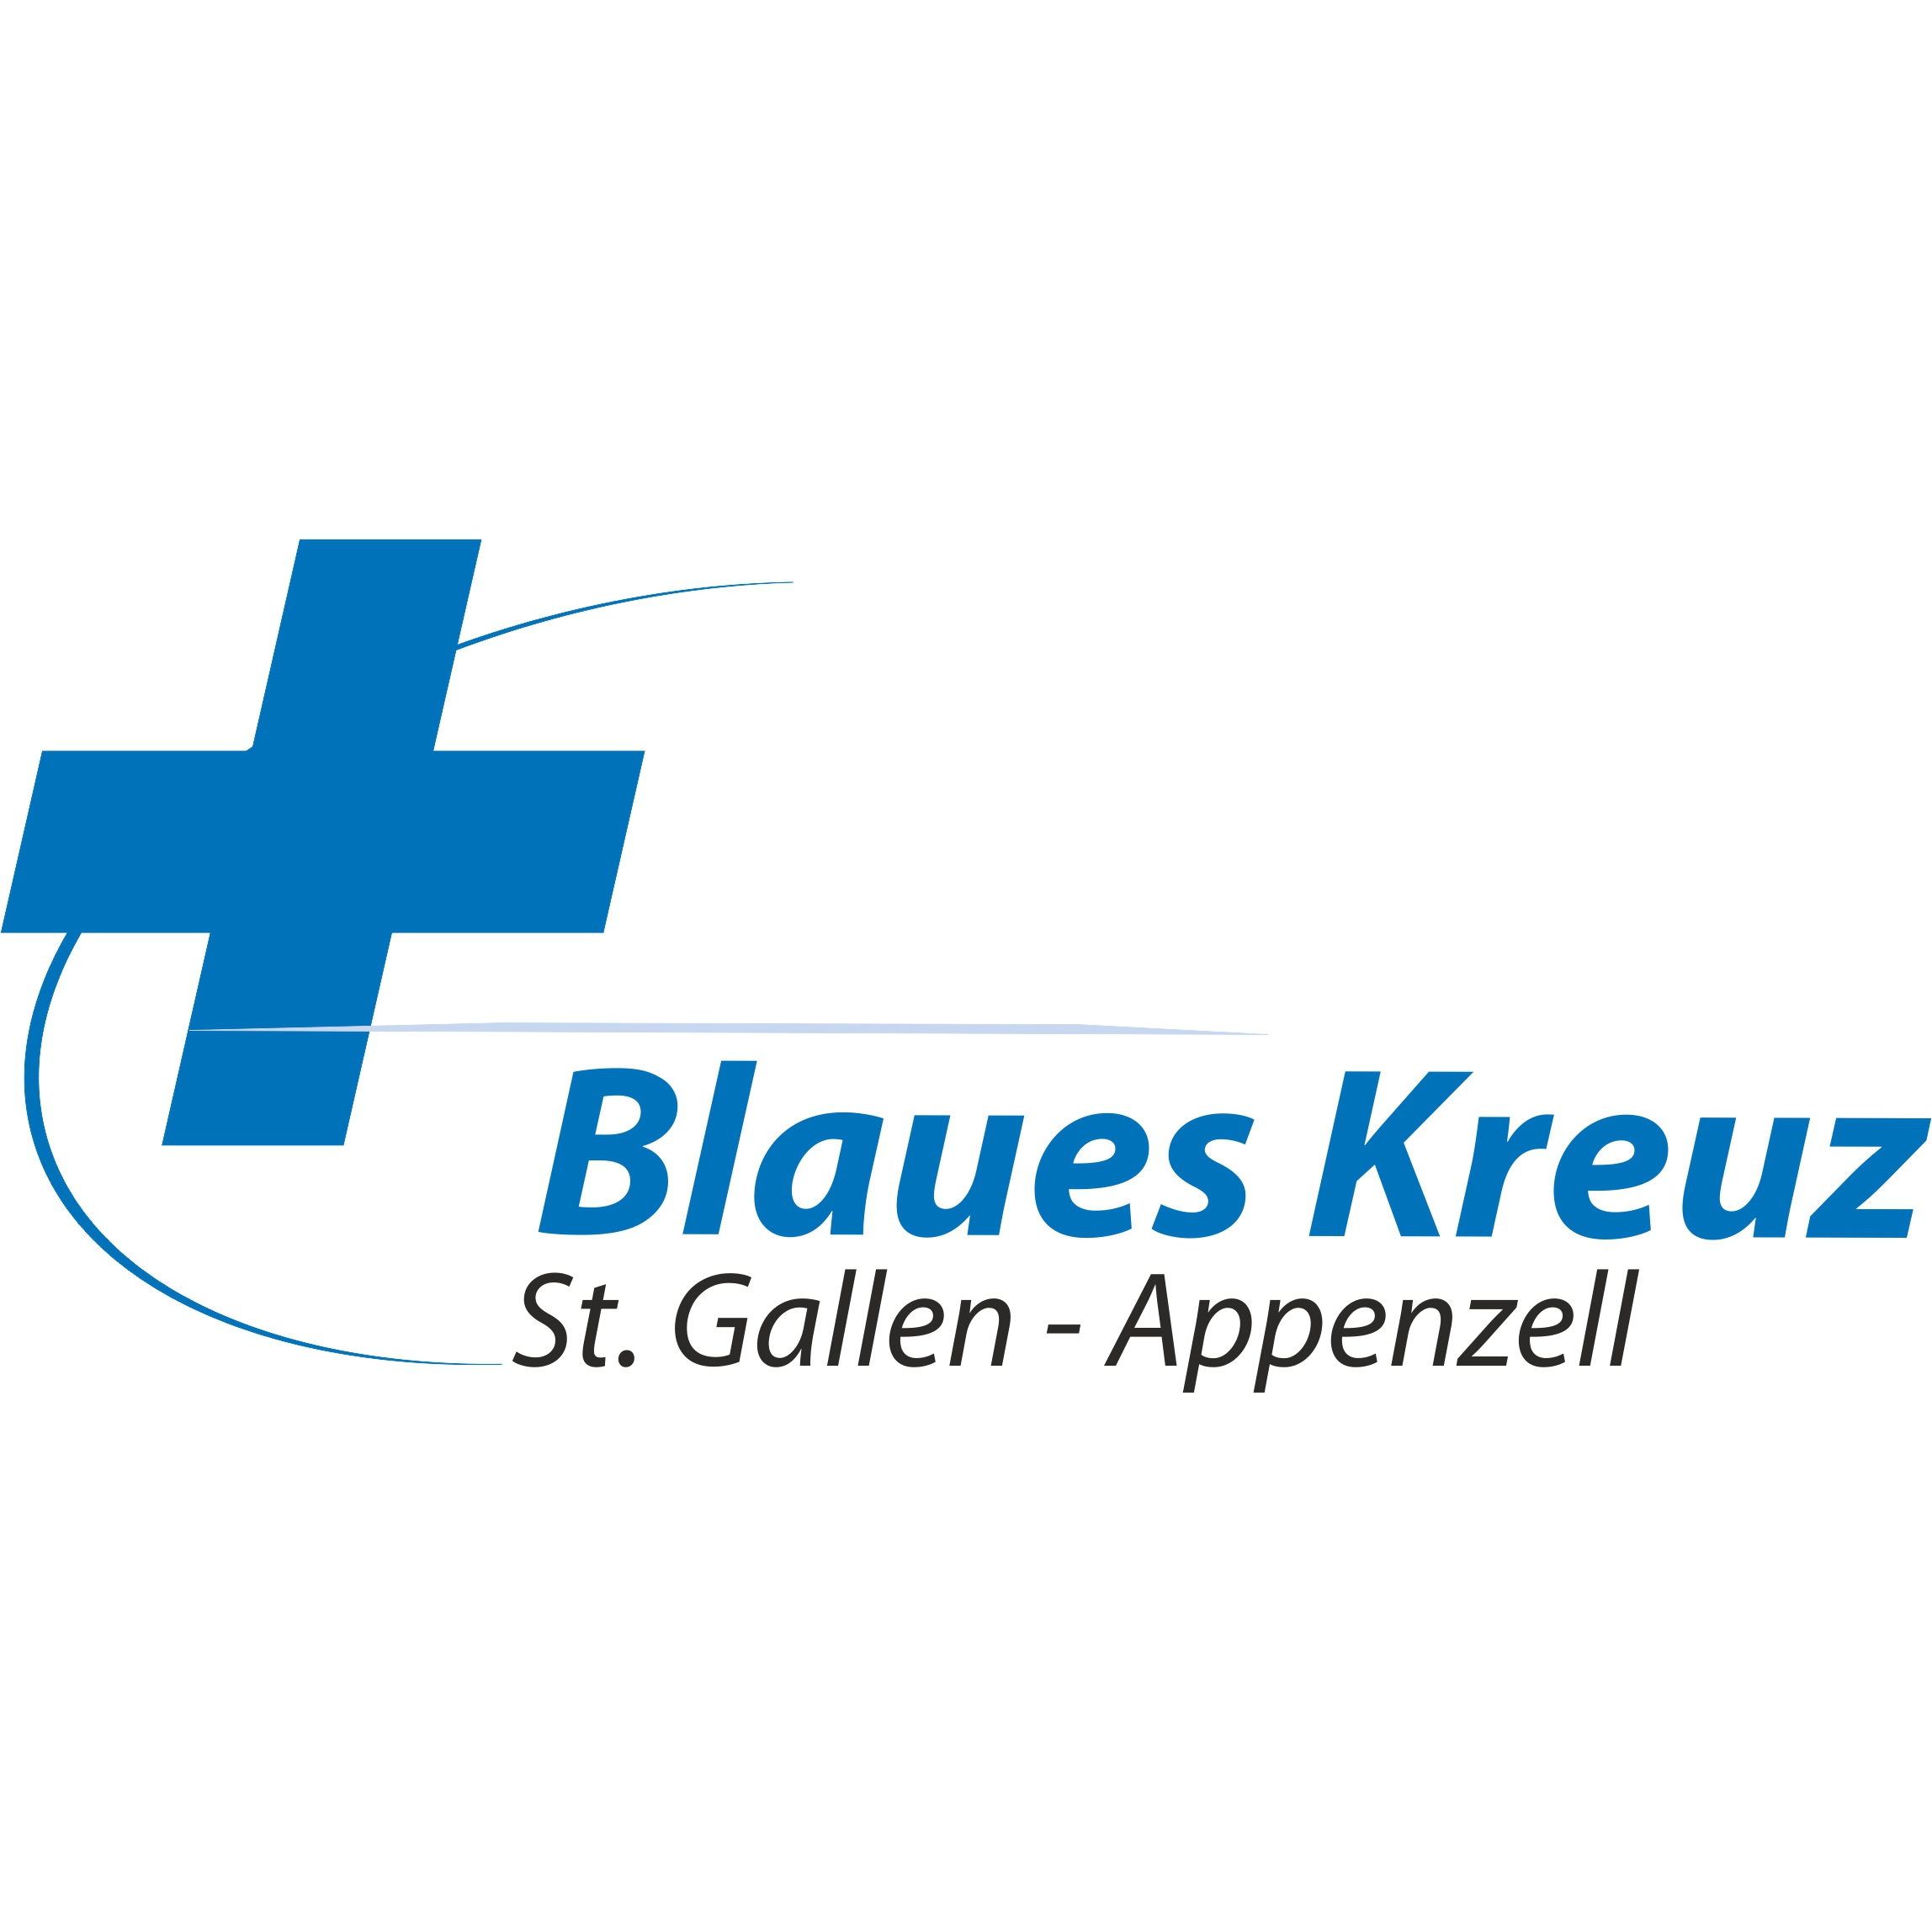 Blaues Kreuz St. Gallen - Appenzell Logo